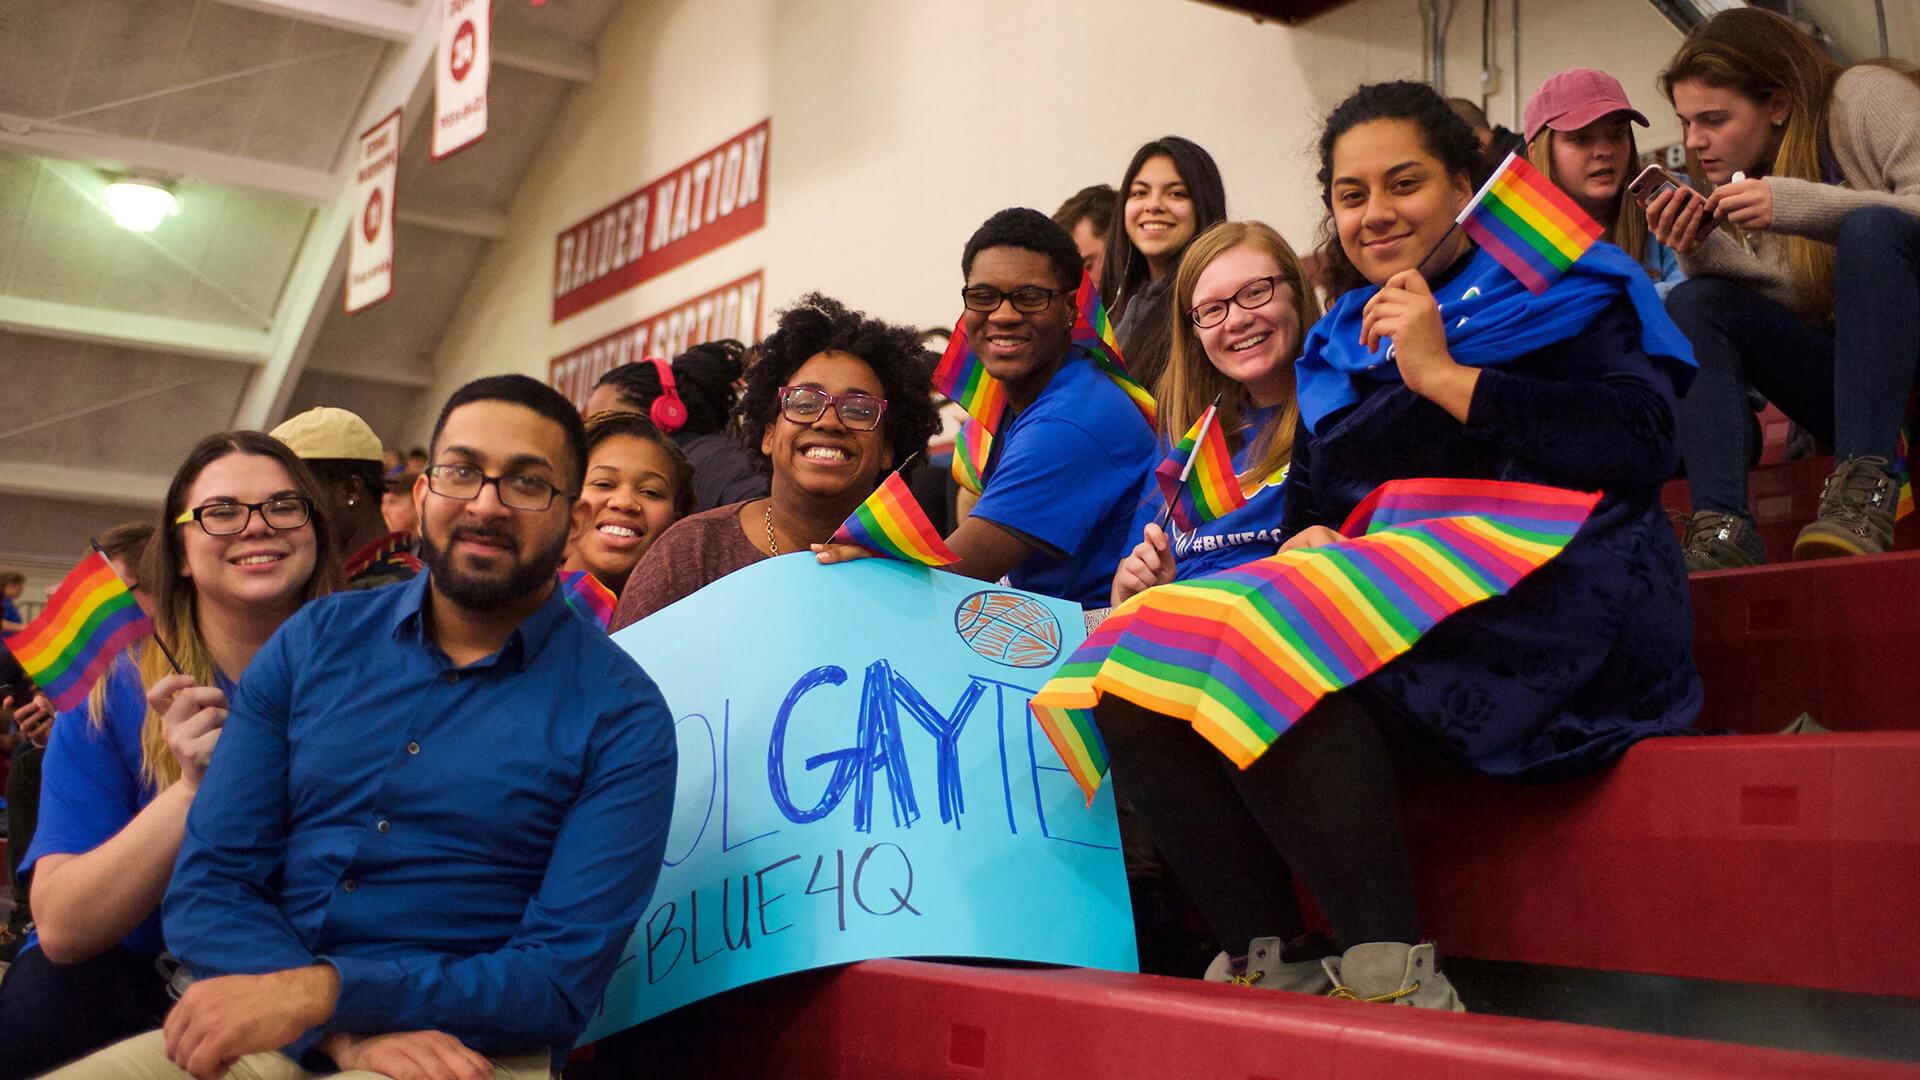 Colgate takes on Boston University in men's basketball during the LGBTQ Awareness Game